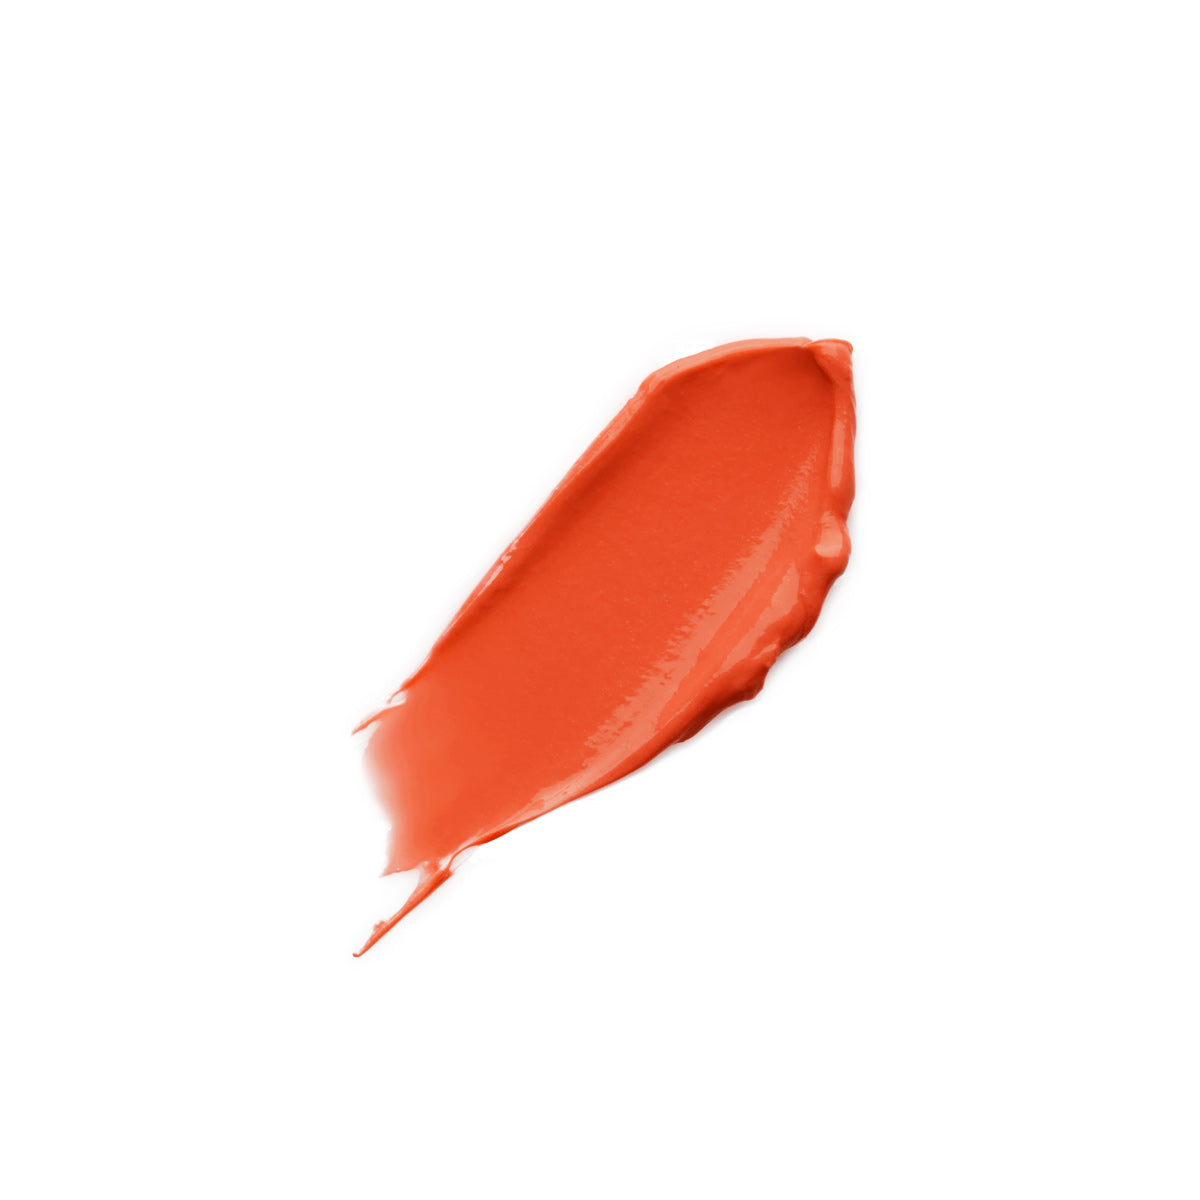 LADYBUG - WARM CORAL - warm coral lipstick lip balm